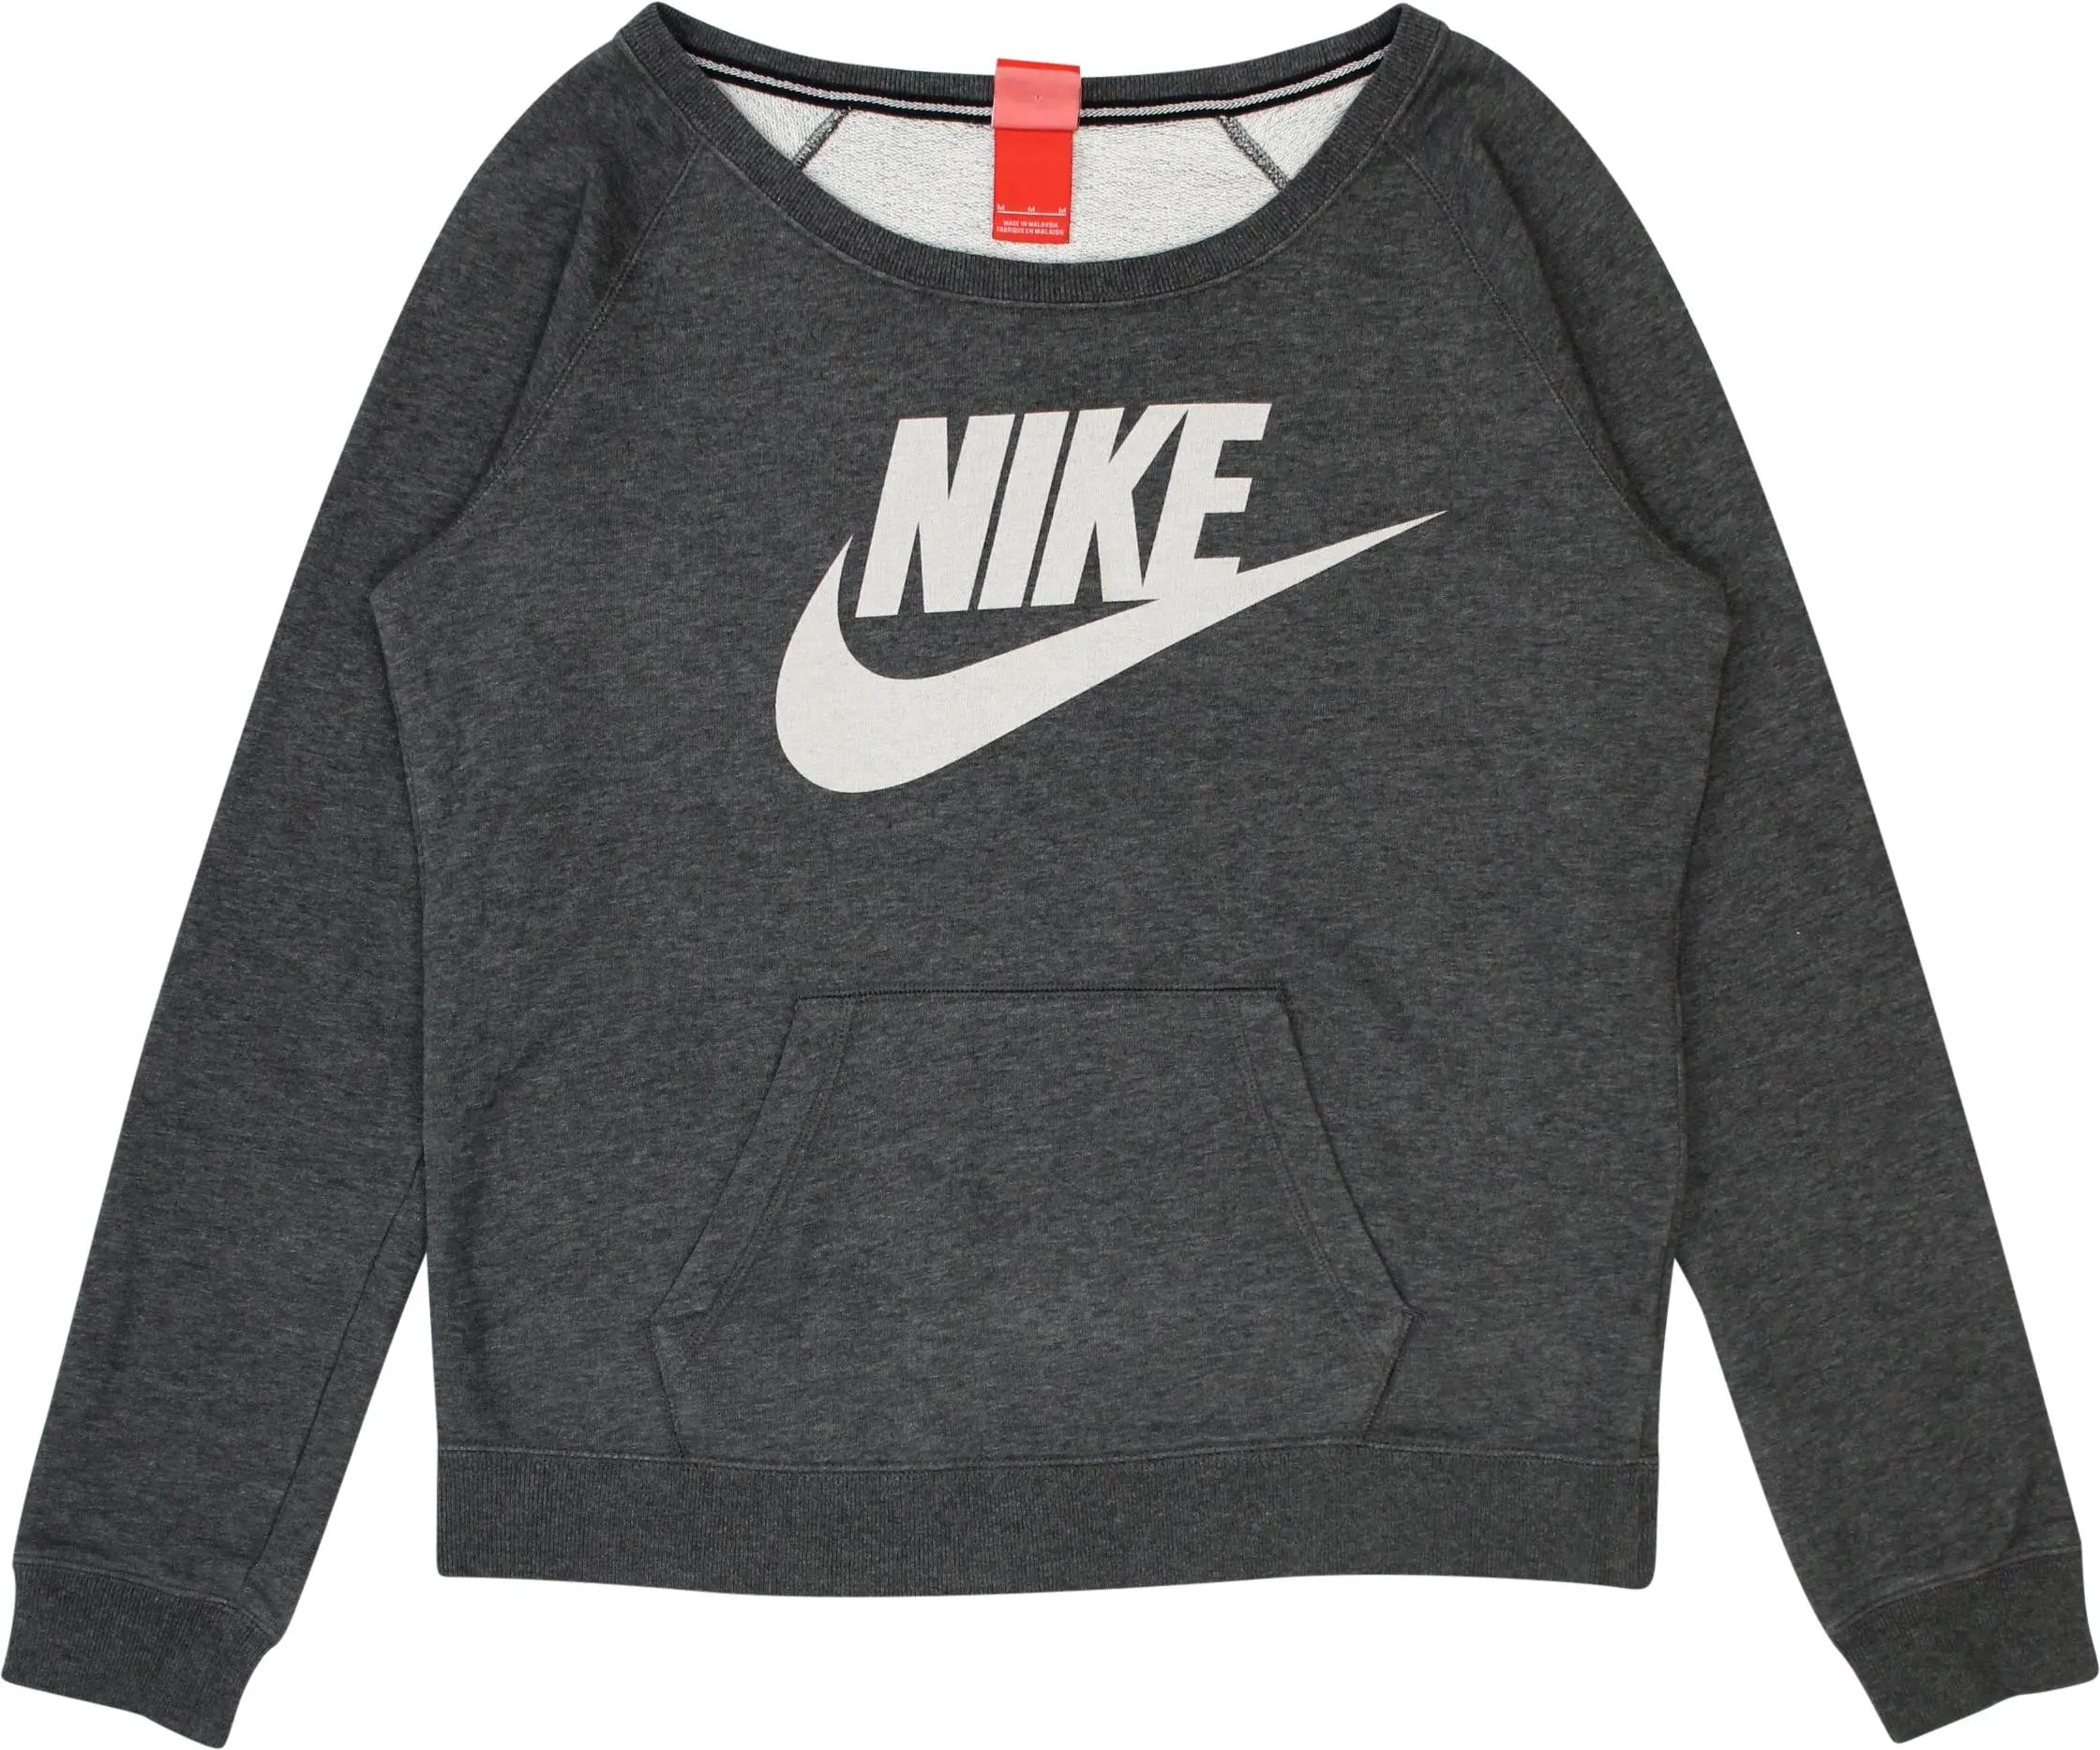 Nike - Nike Crewneck Sweatshirt- ThriftTale.com - Vintage and second handclothing